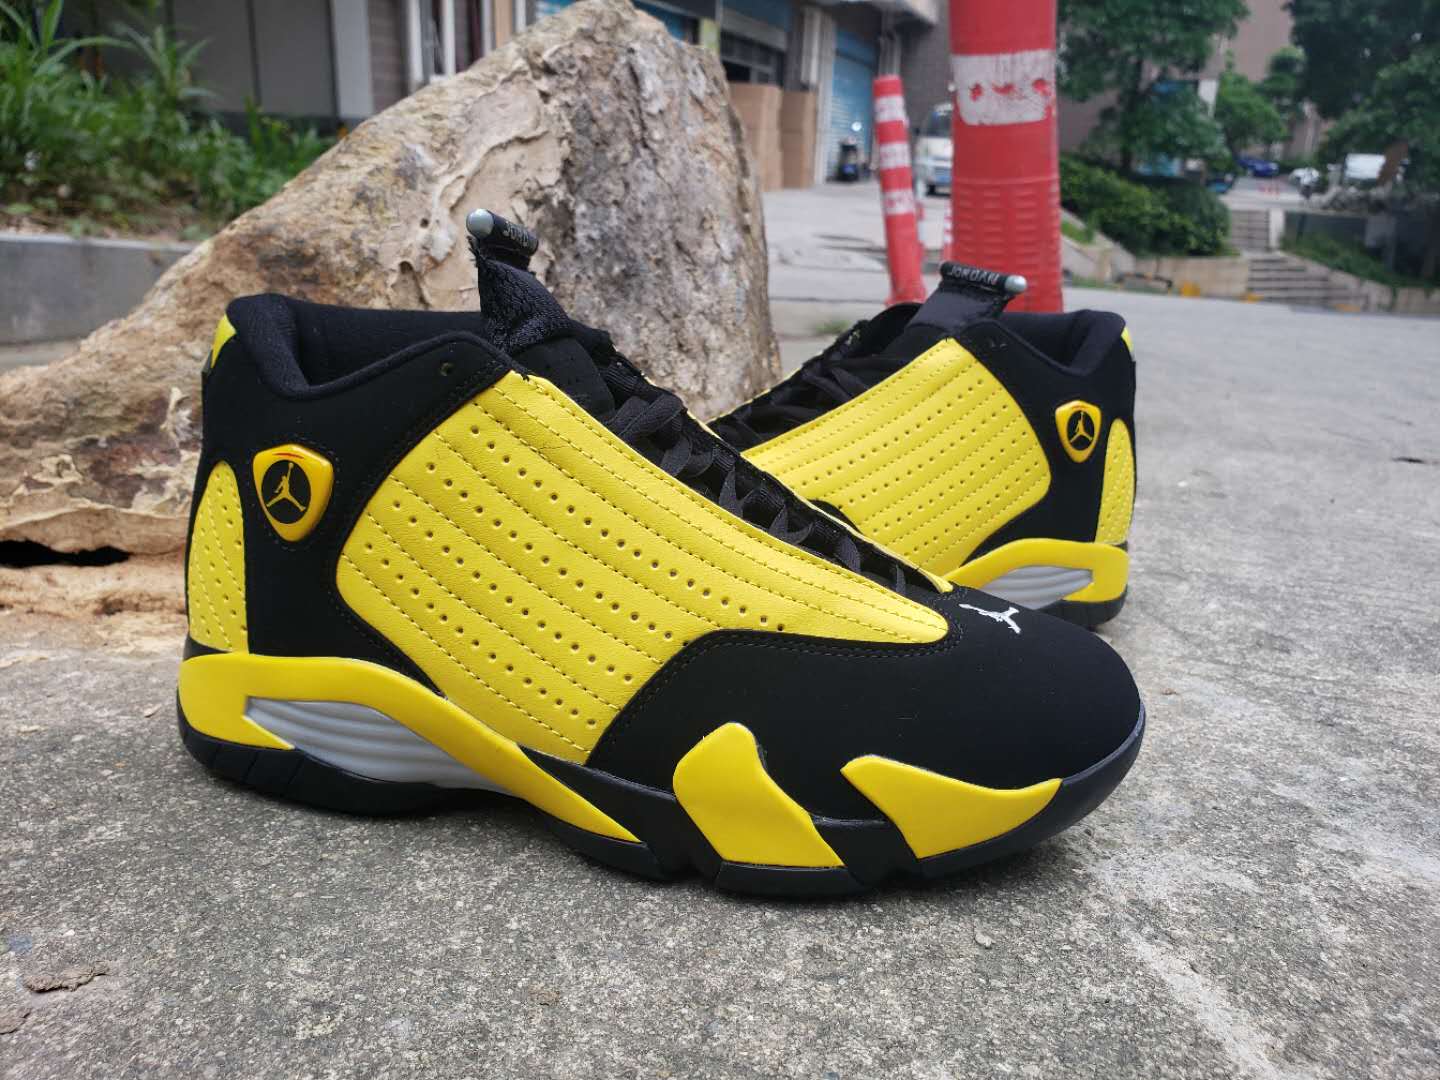 yellow and black jordan shoes